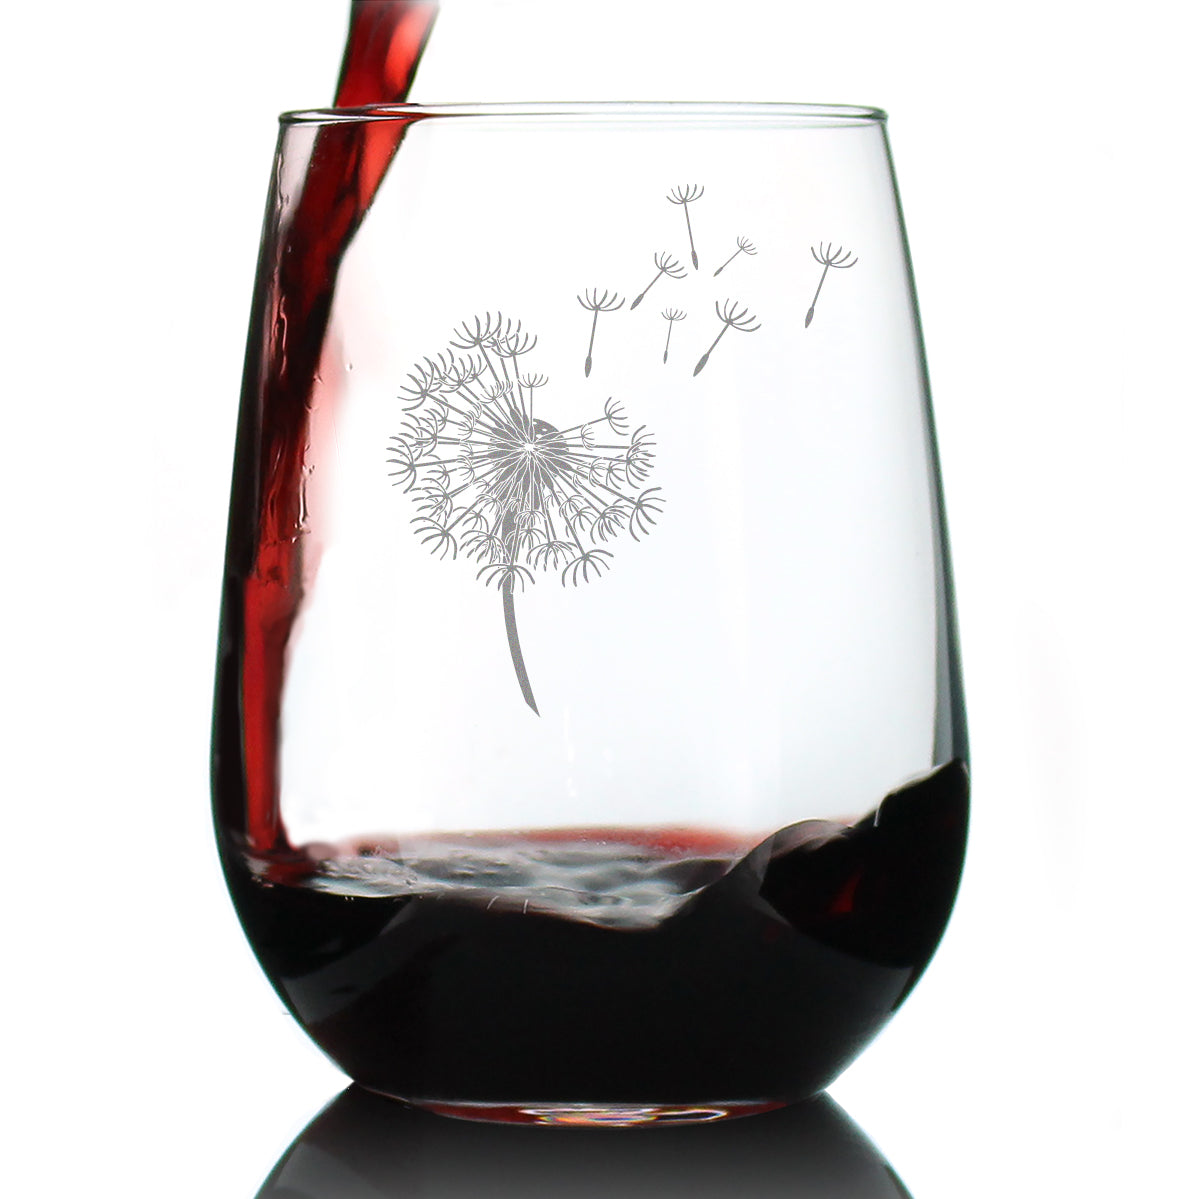 Dandelion Stemless Wine Glass - Friendship Gifts and Dandelion Flowers Decor for New Beginnings - Large 17 Oz Glasses